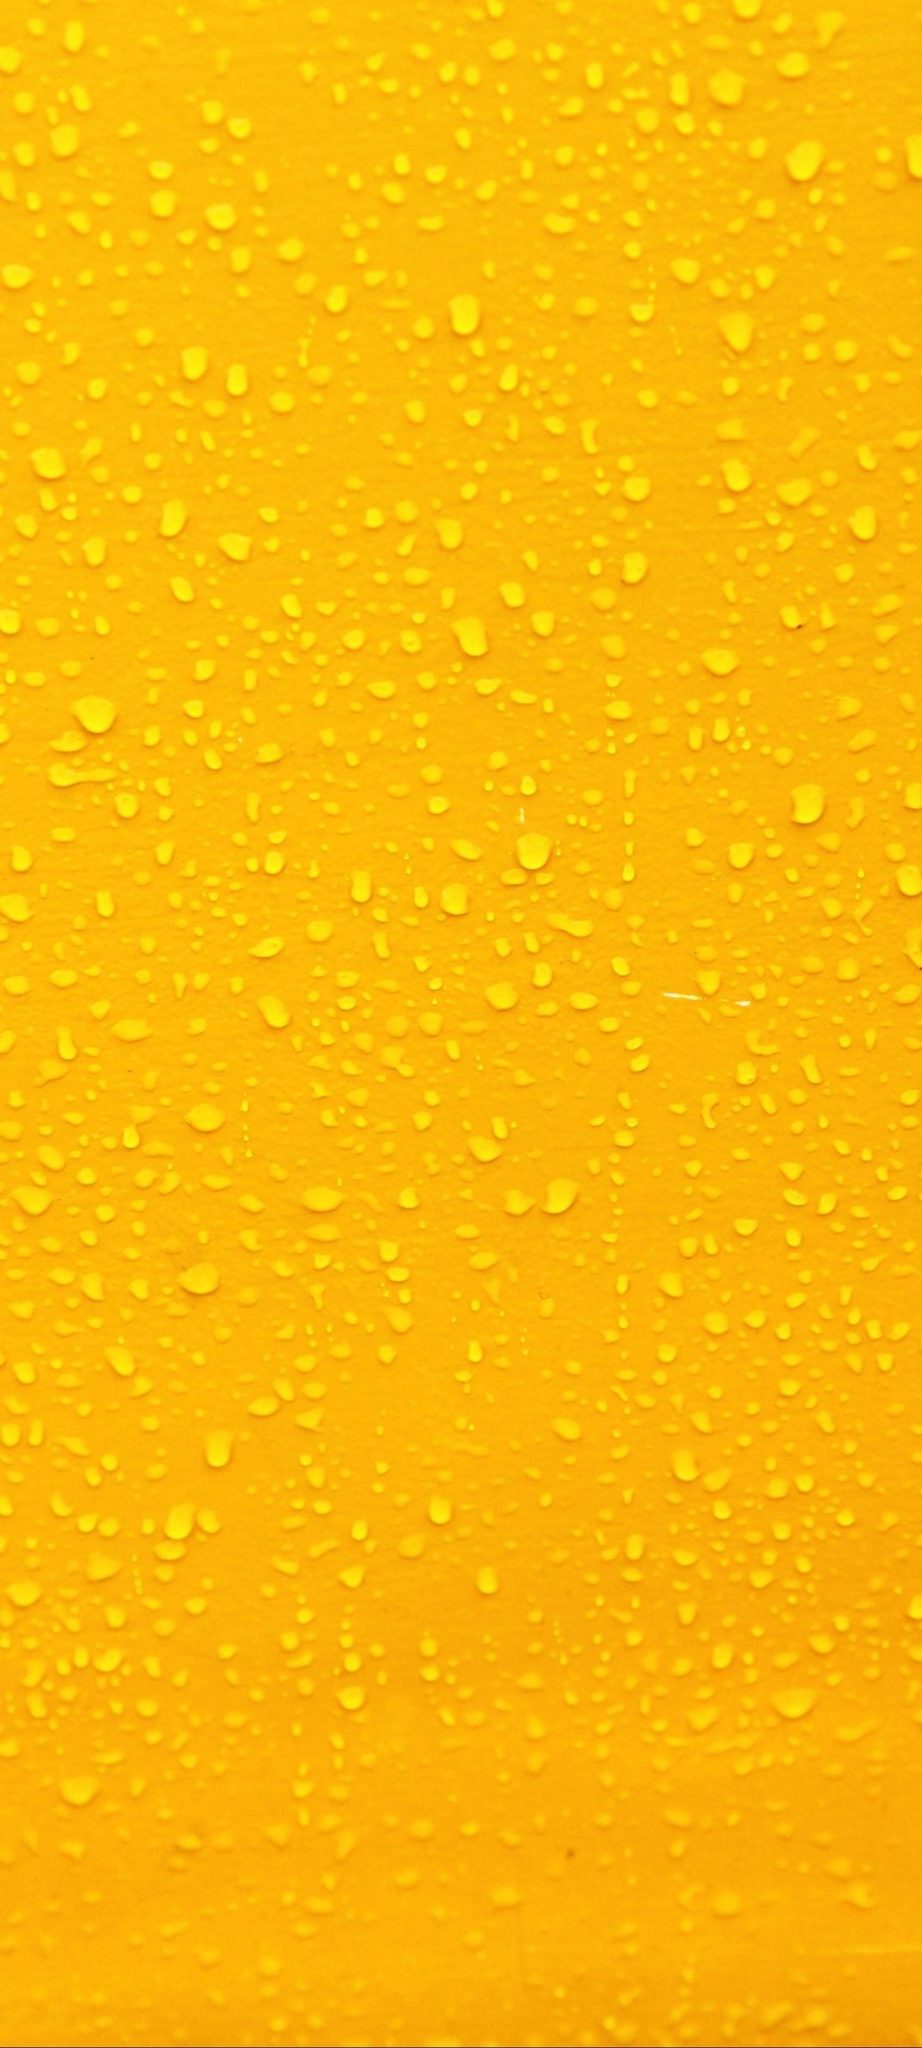 Yellow Water Drops Wallpaper